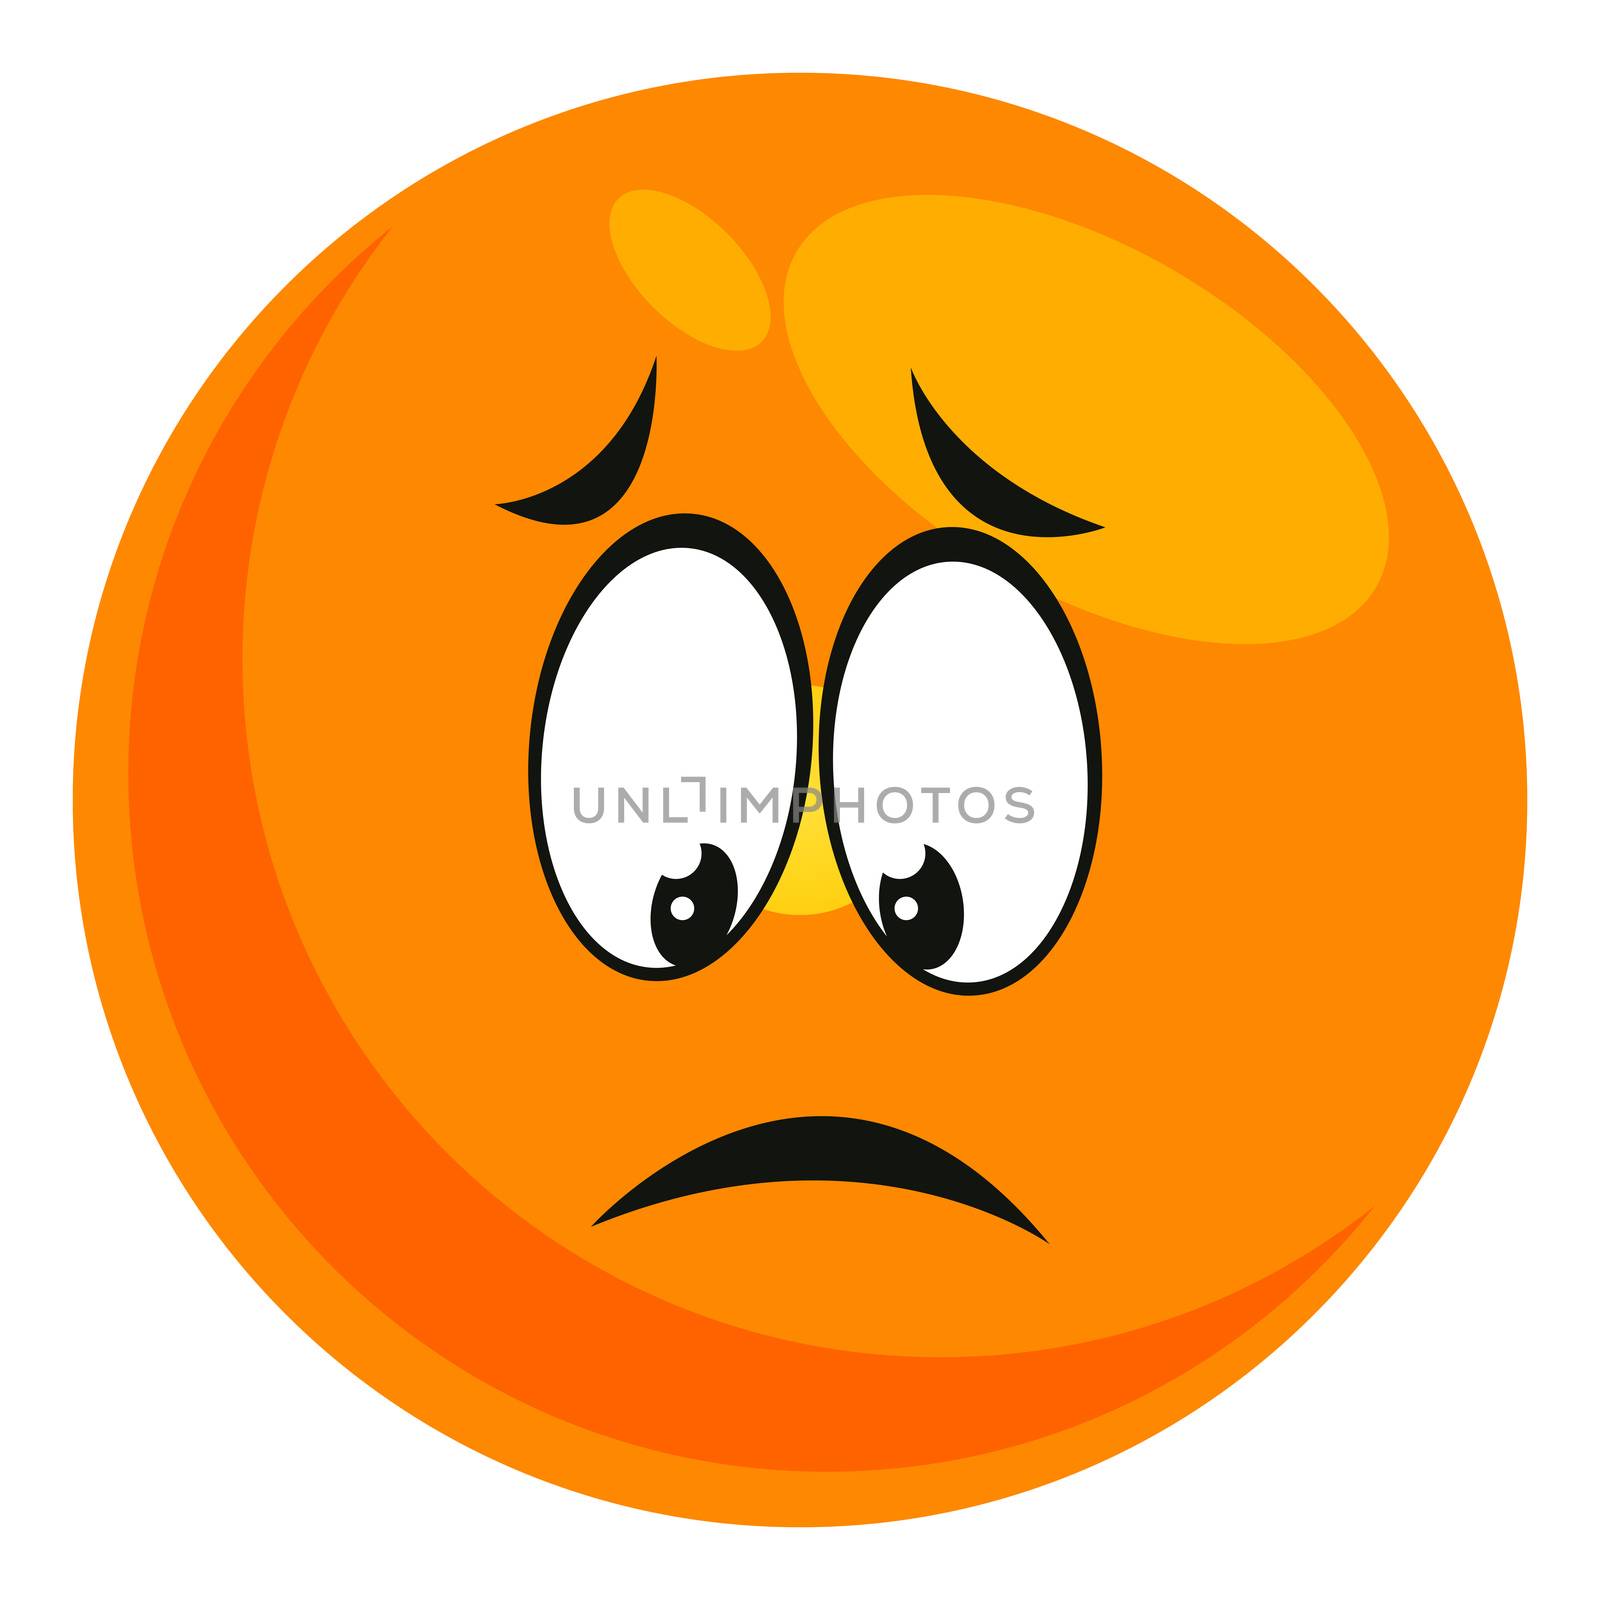 Sad emoji, illustration, vector on white background